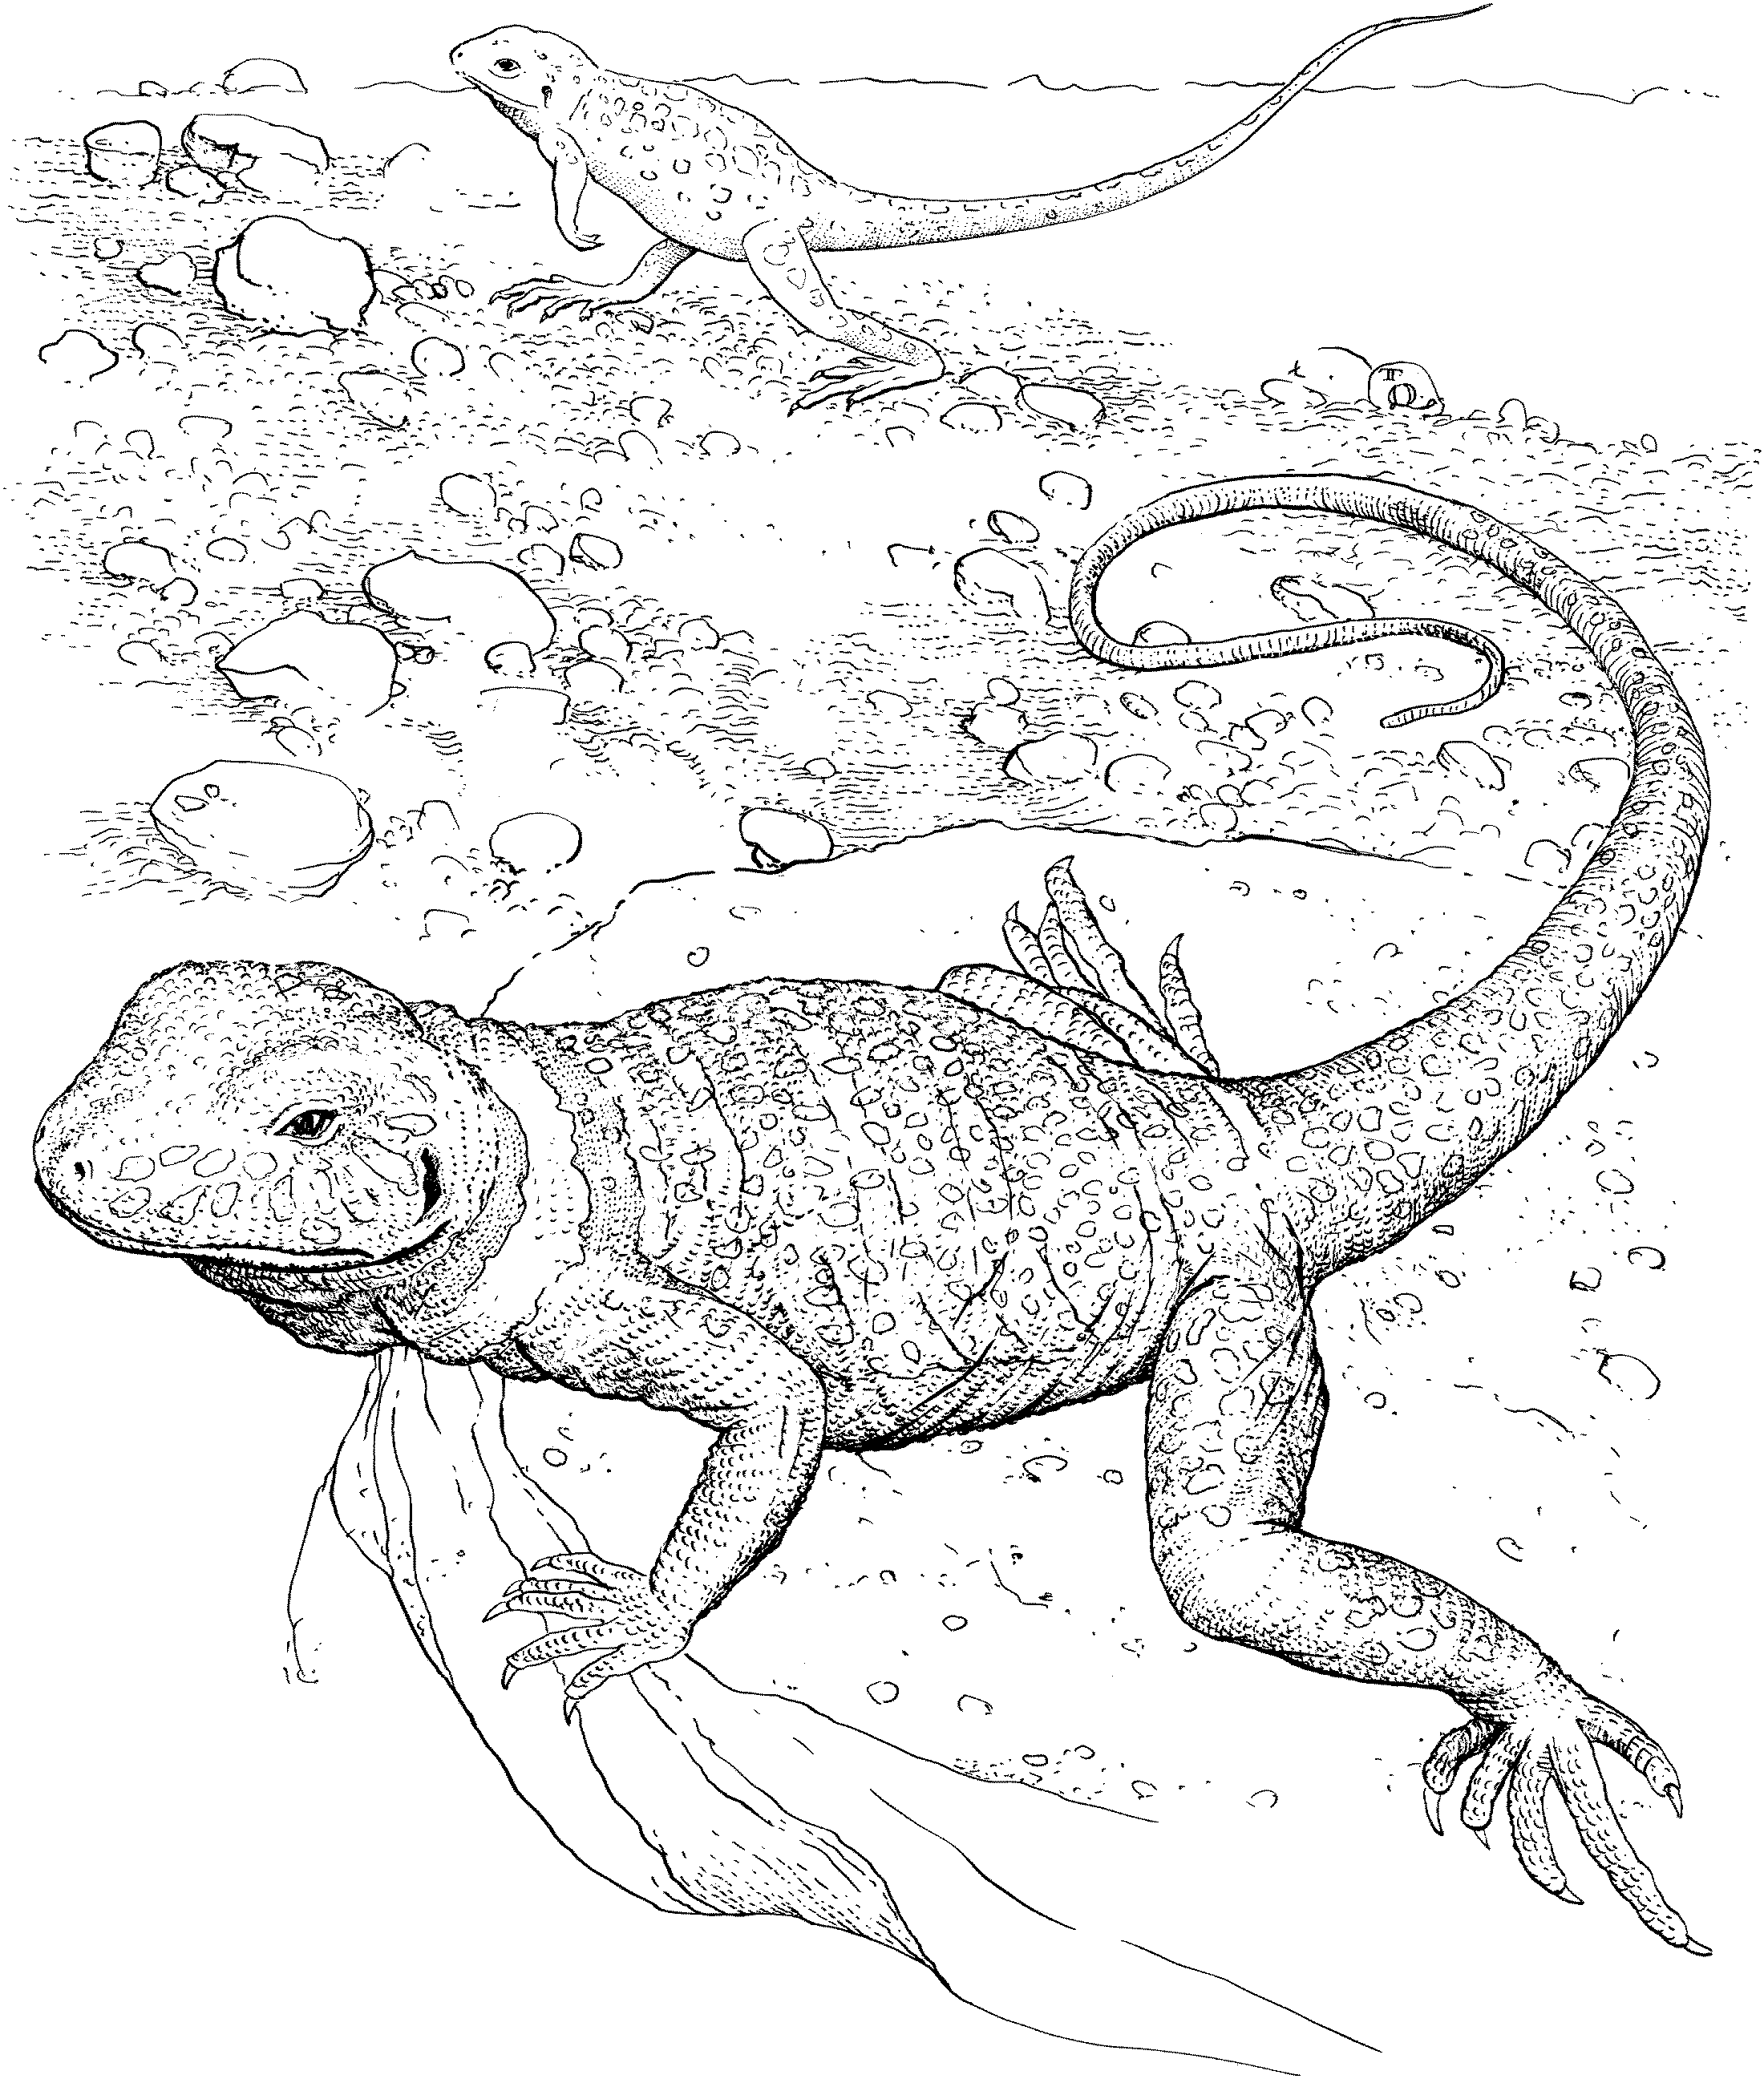 Lizard Drawing Realistic Sketch